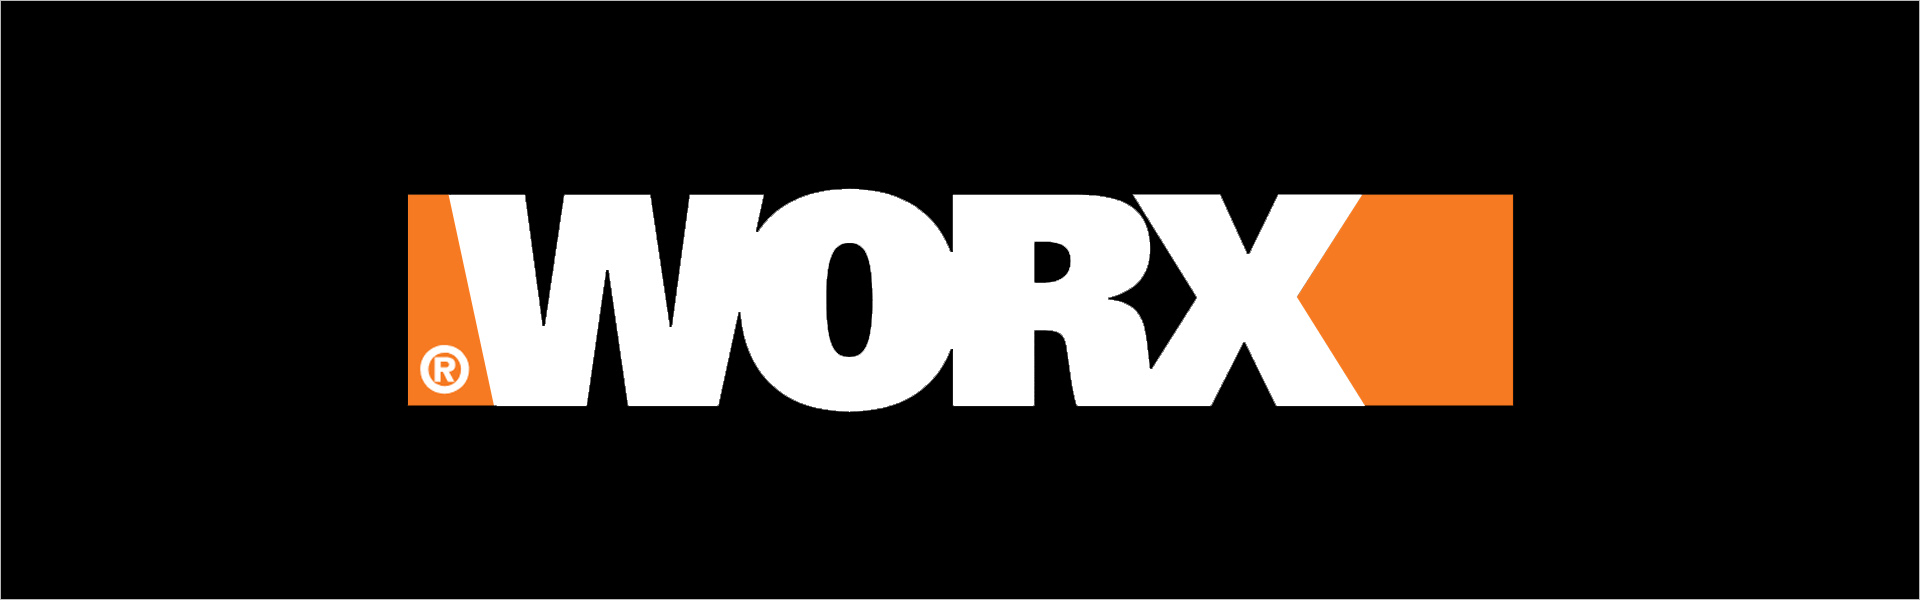 Worx WX030 Worx